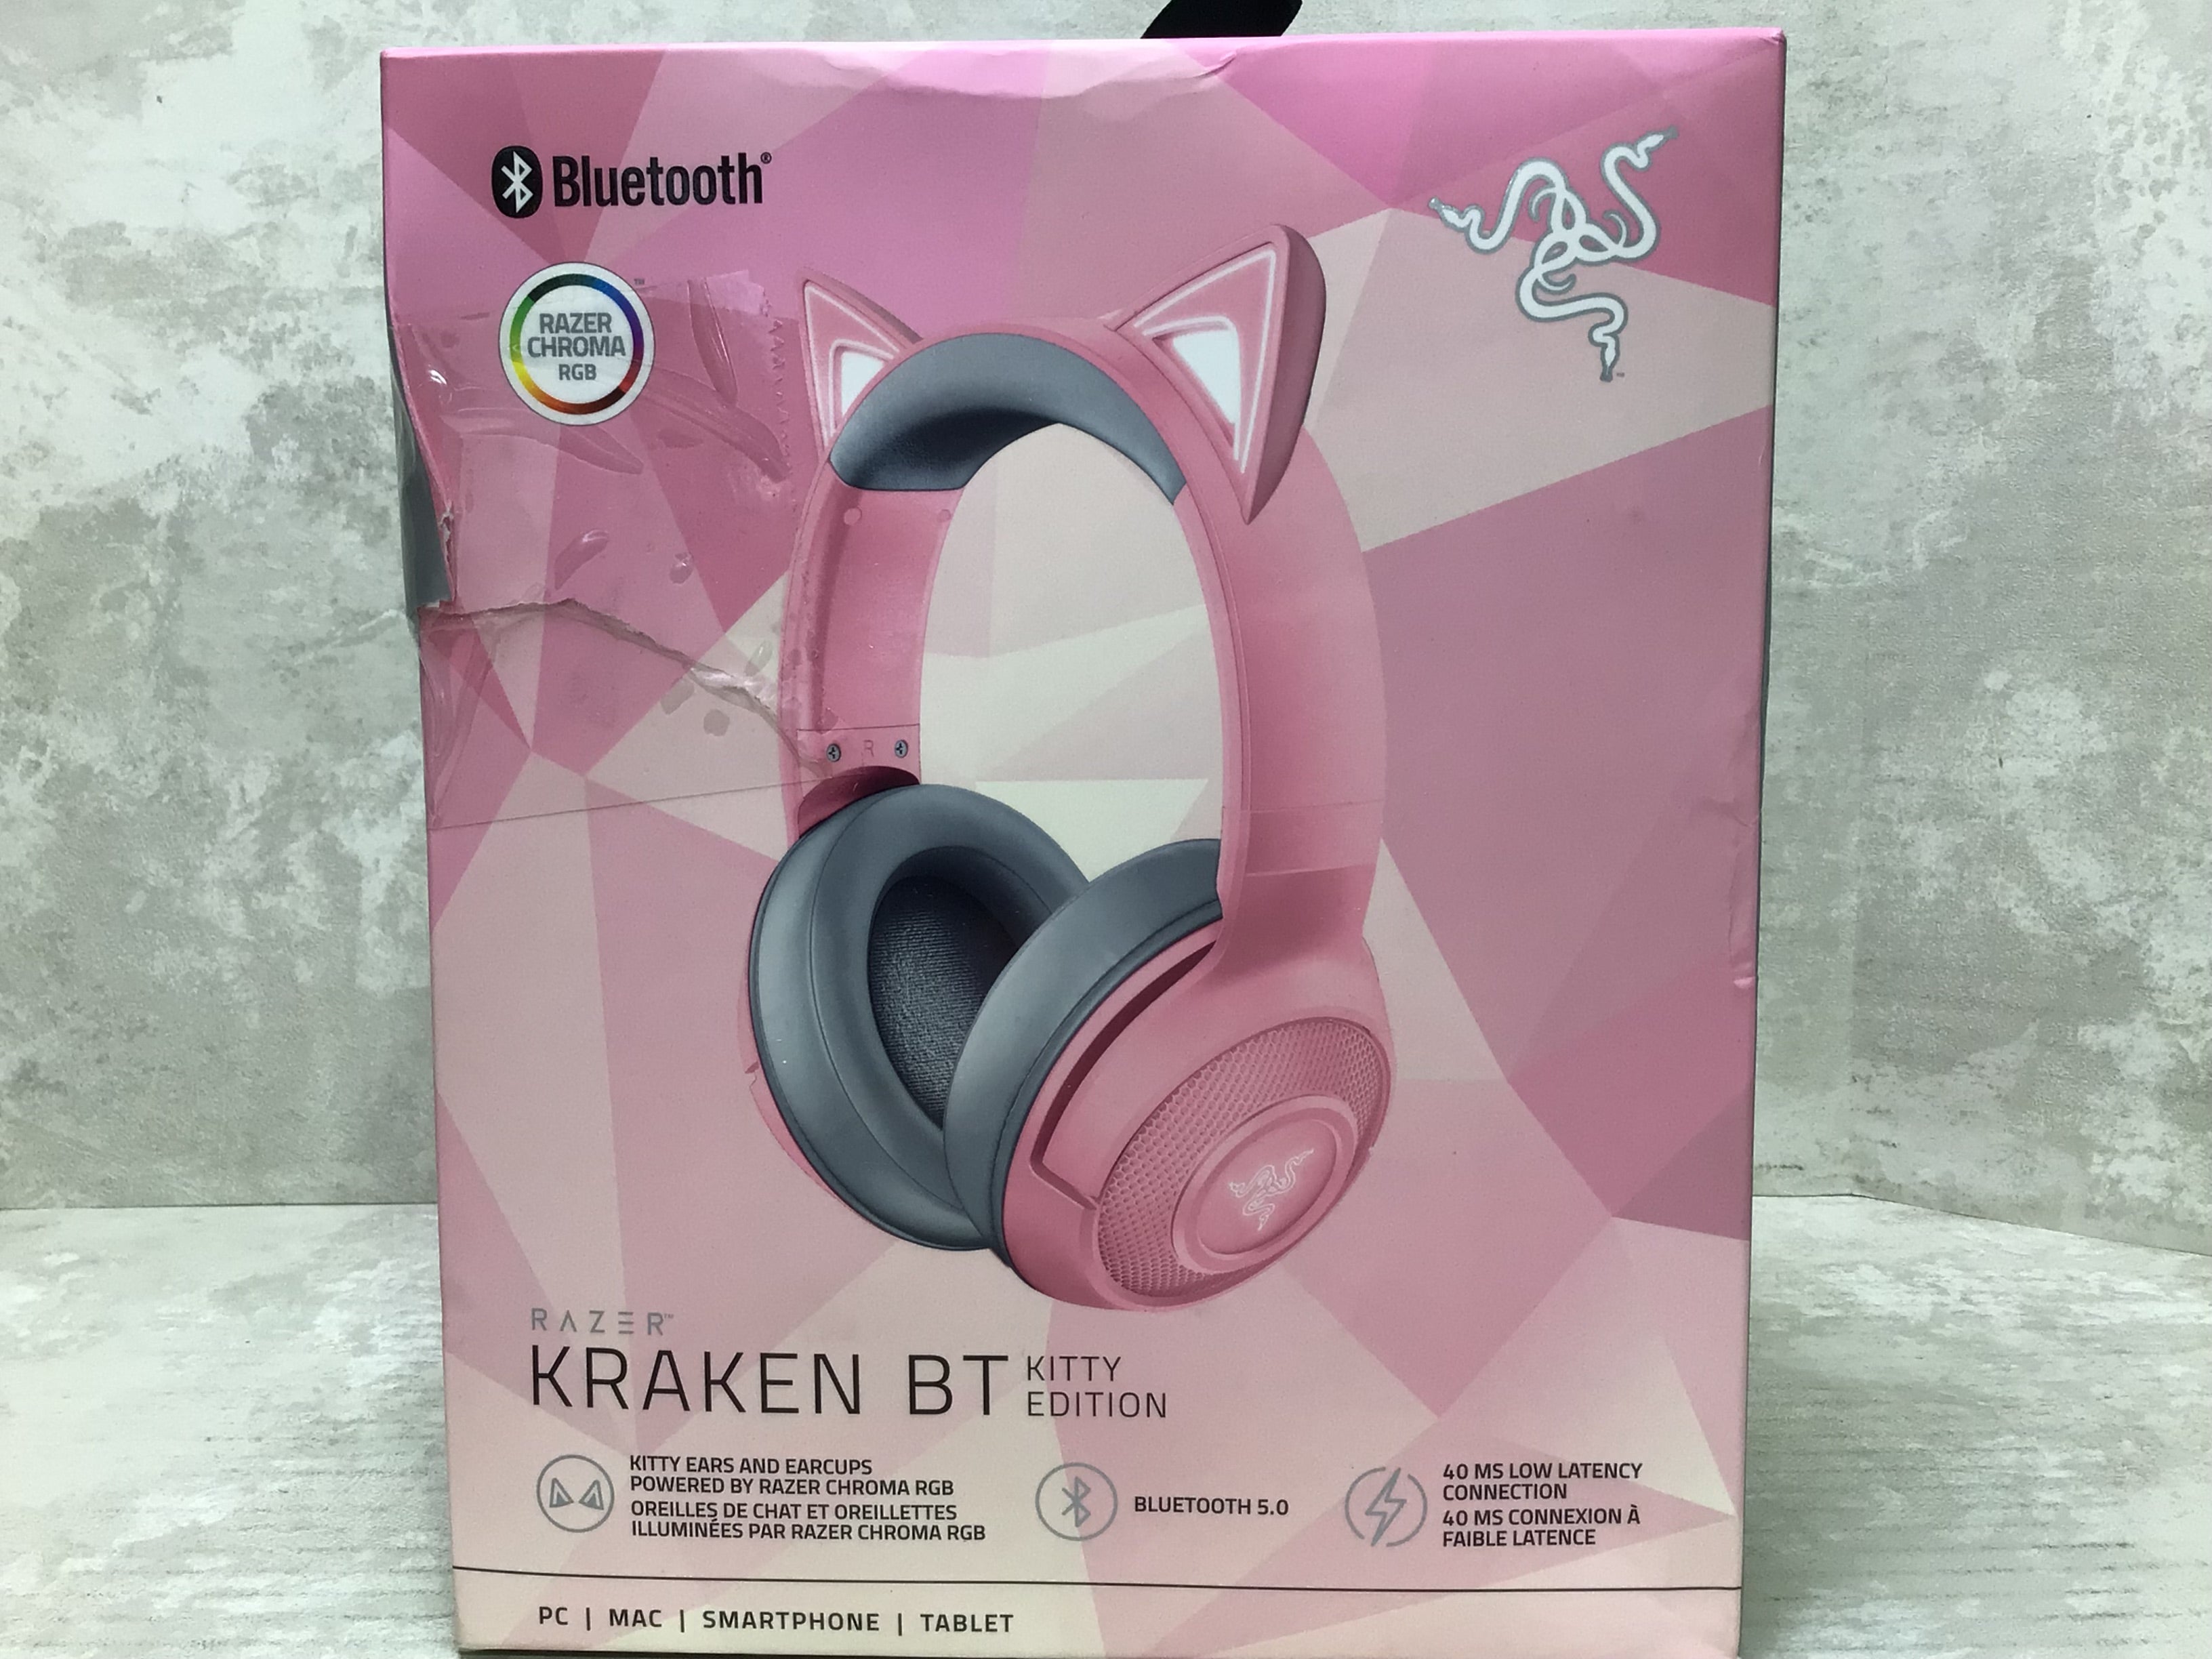 Razer Kraken BT Kitty Edition: Bluetooth 5.0-40ms Low Latency Connection (7685093130478)